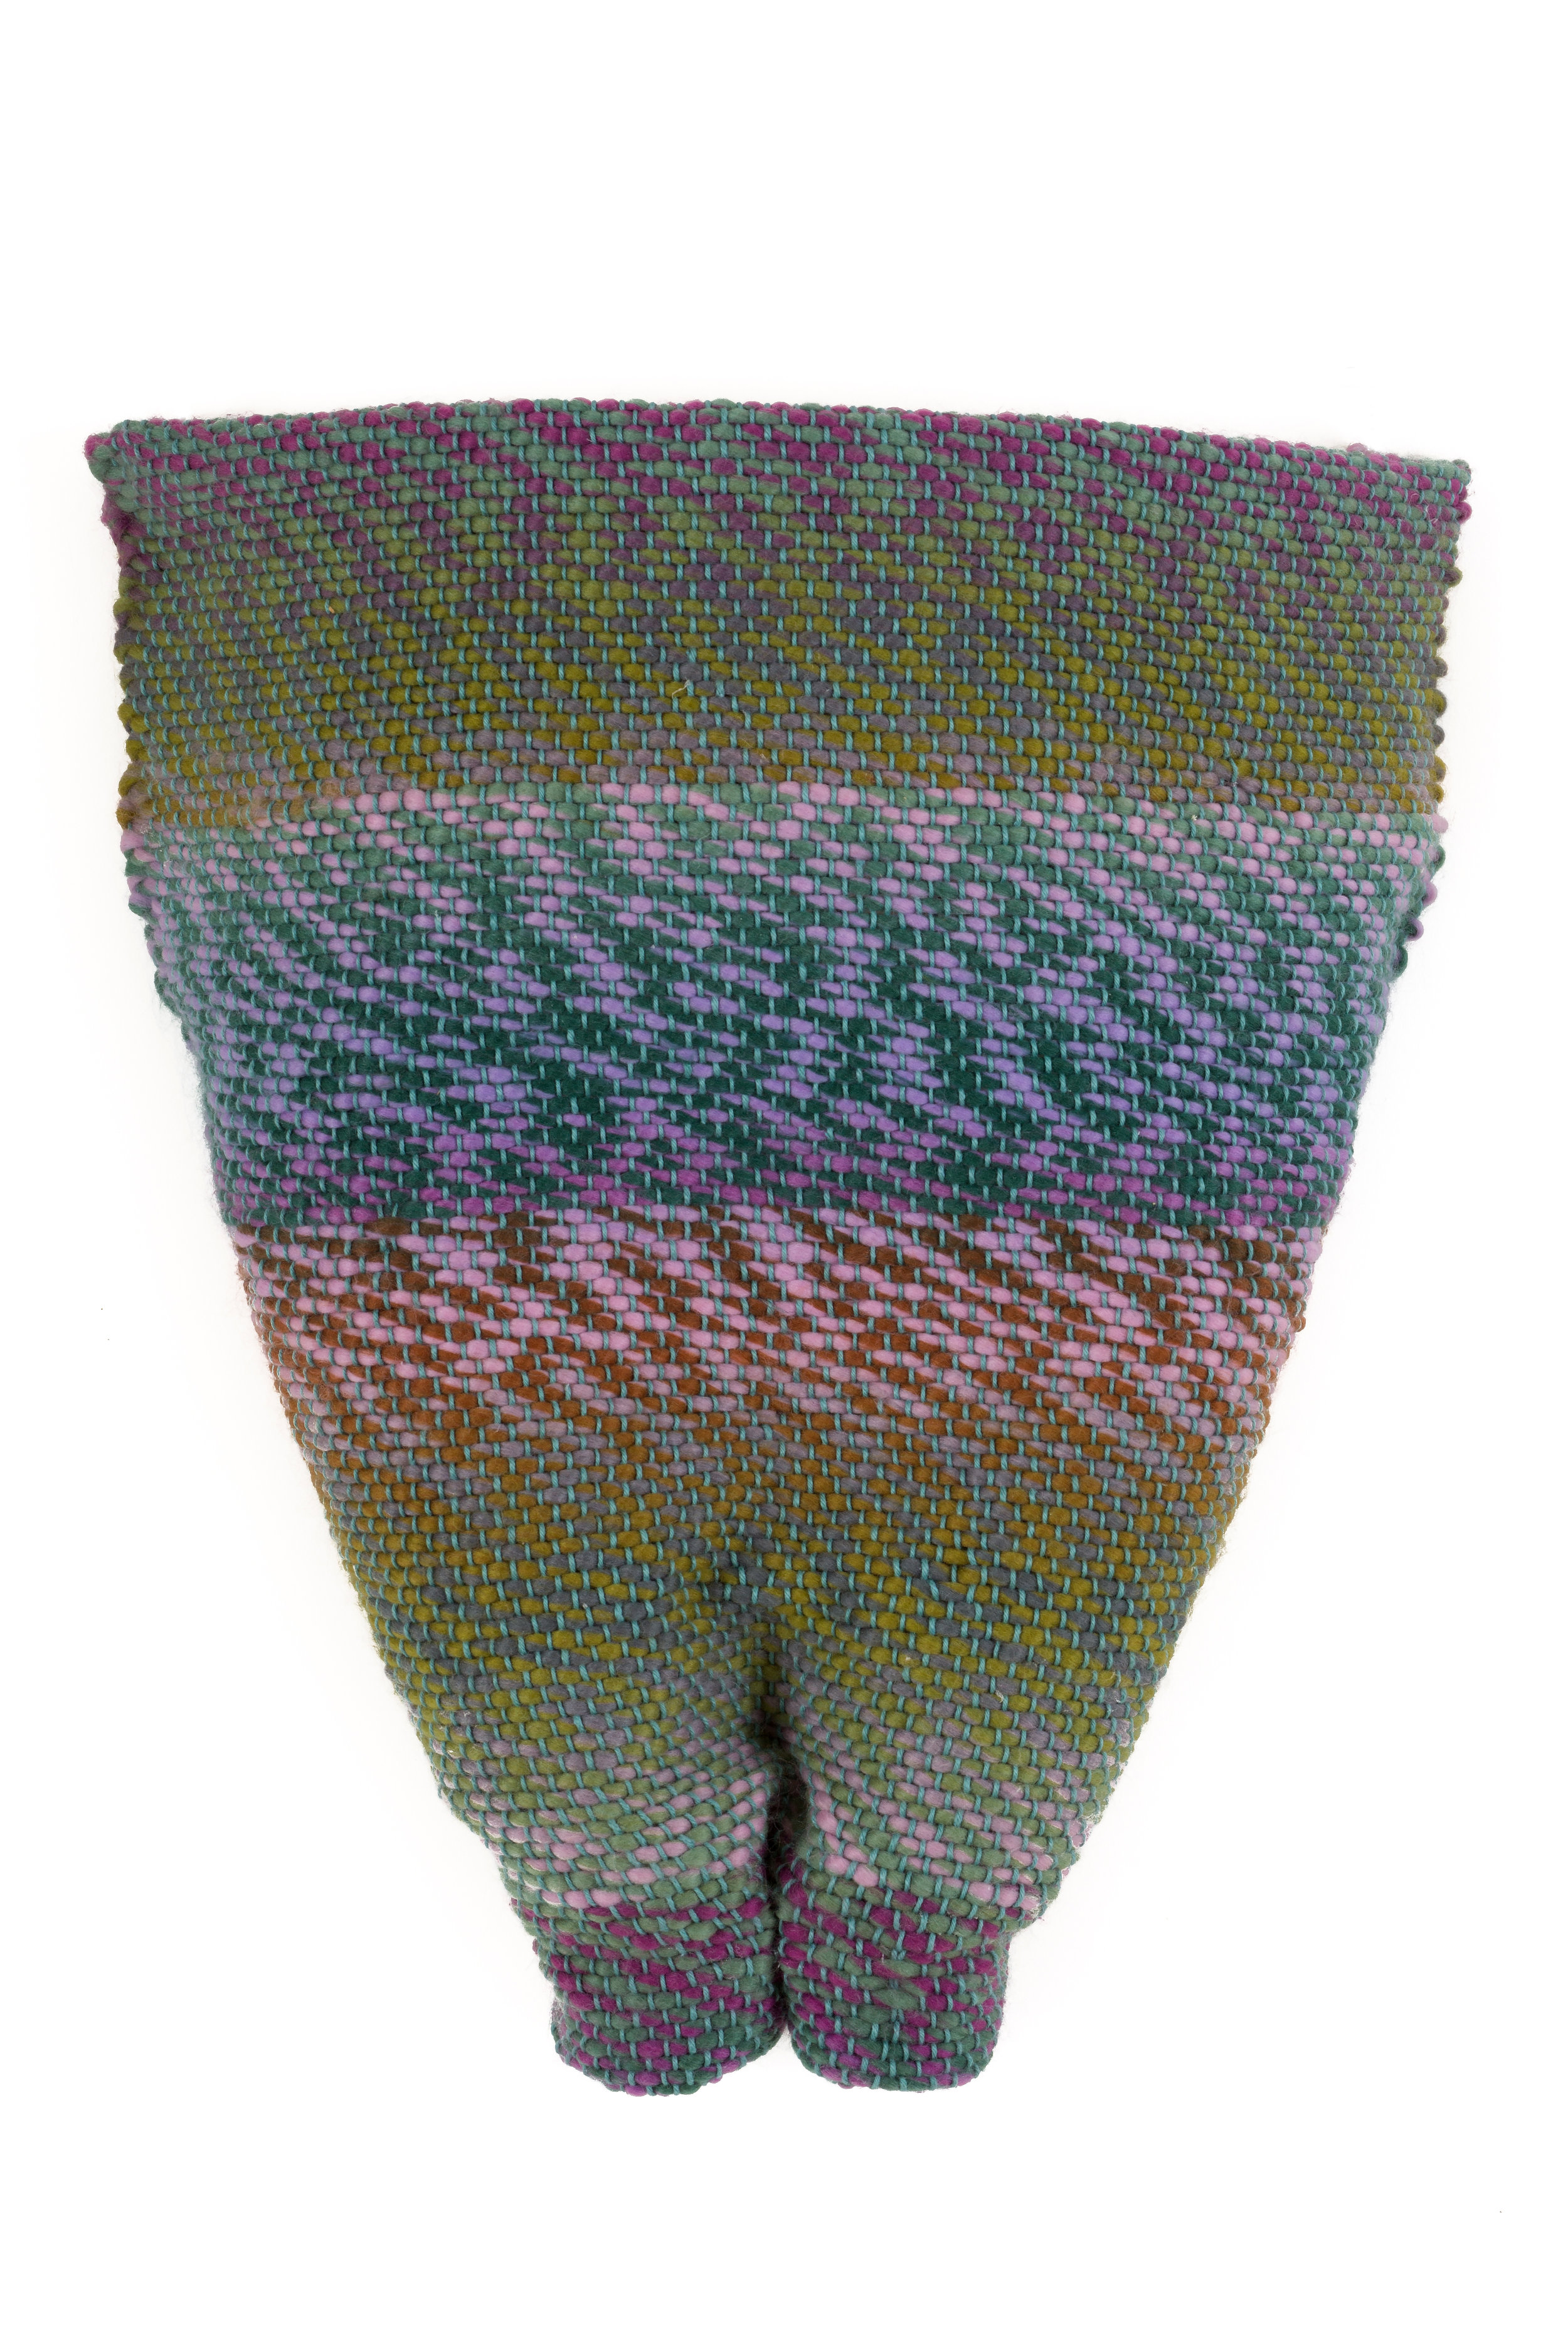  Sylvia Vander Sluis,  Turquoise/Green/Purple Pelvis,  Handwoven acrylic yarn over mesh, 15x12x4 